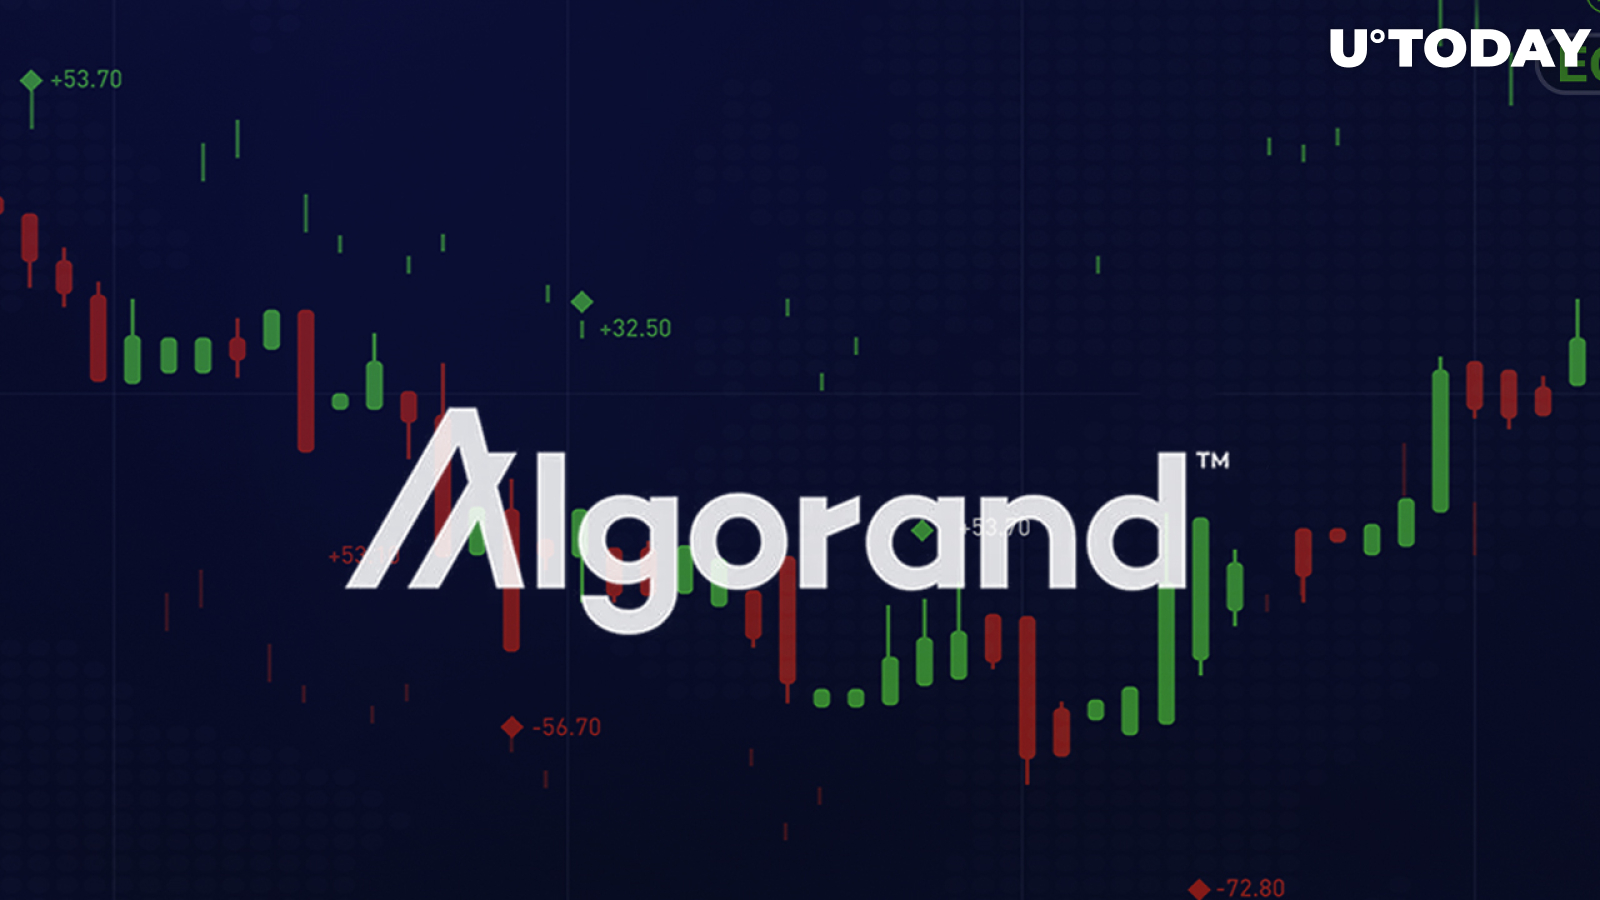 Algorand Spikes 15% on New Initiative, Plans to Share 2 Million ALGO Tokens